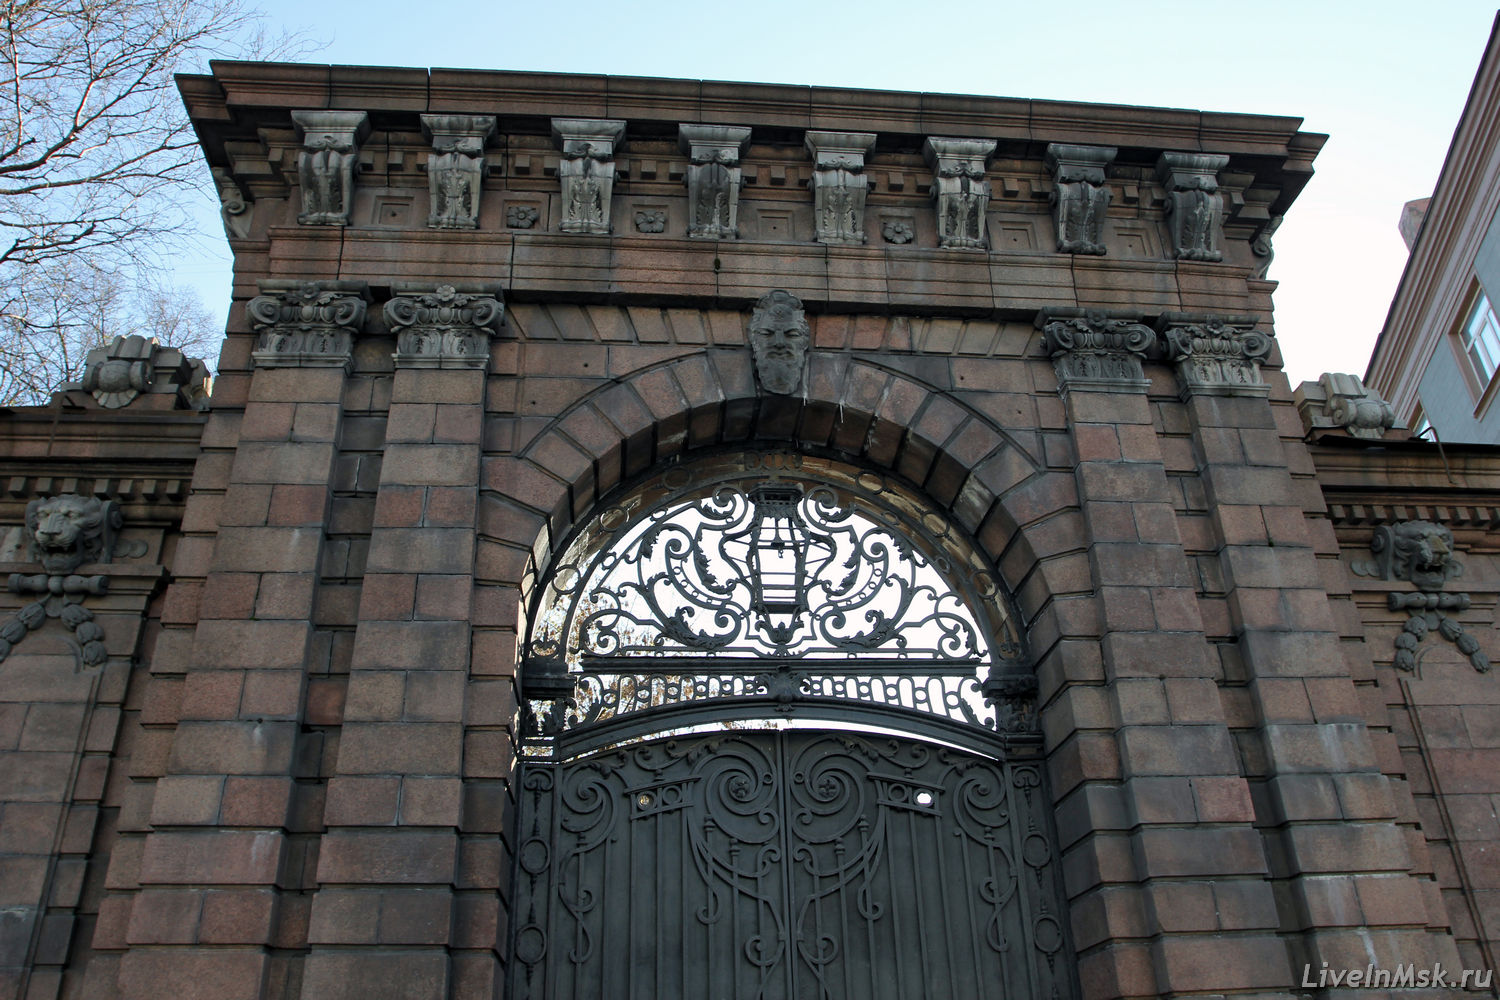 Ворота усадьбы фон Дервиза, фото 2015 года